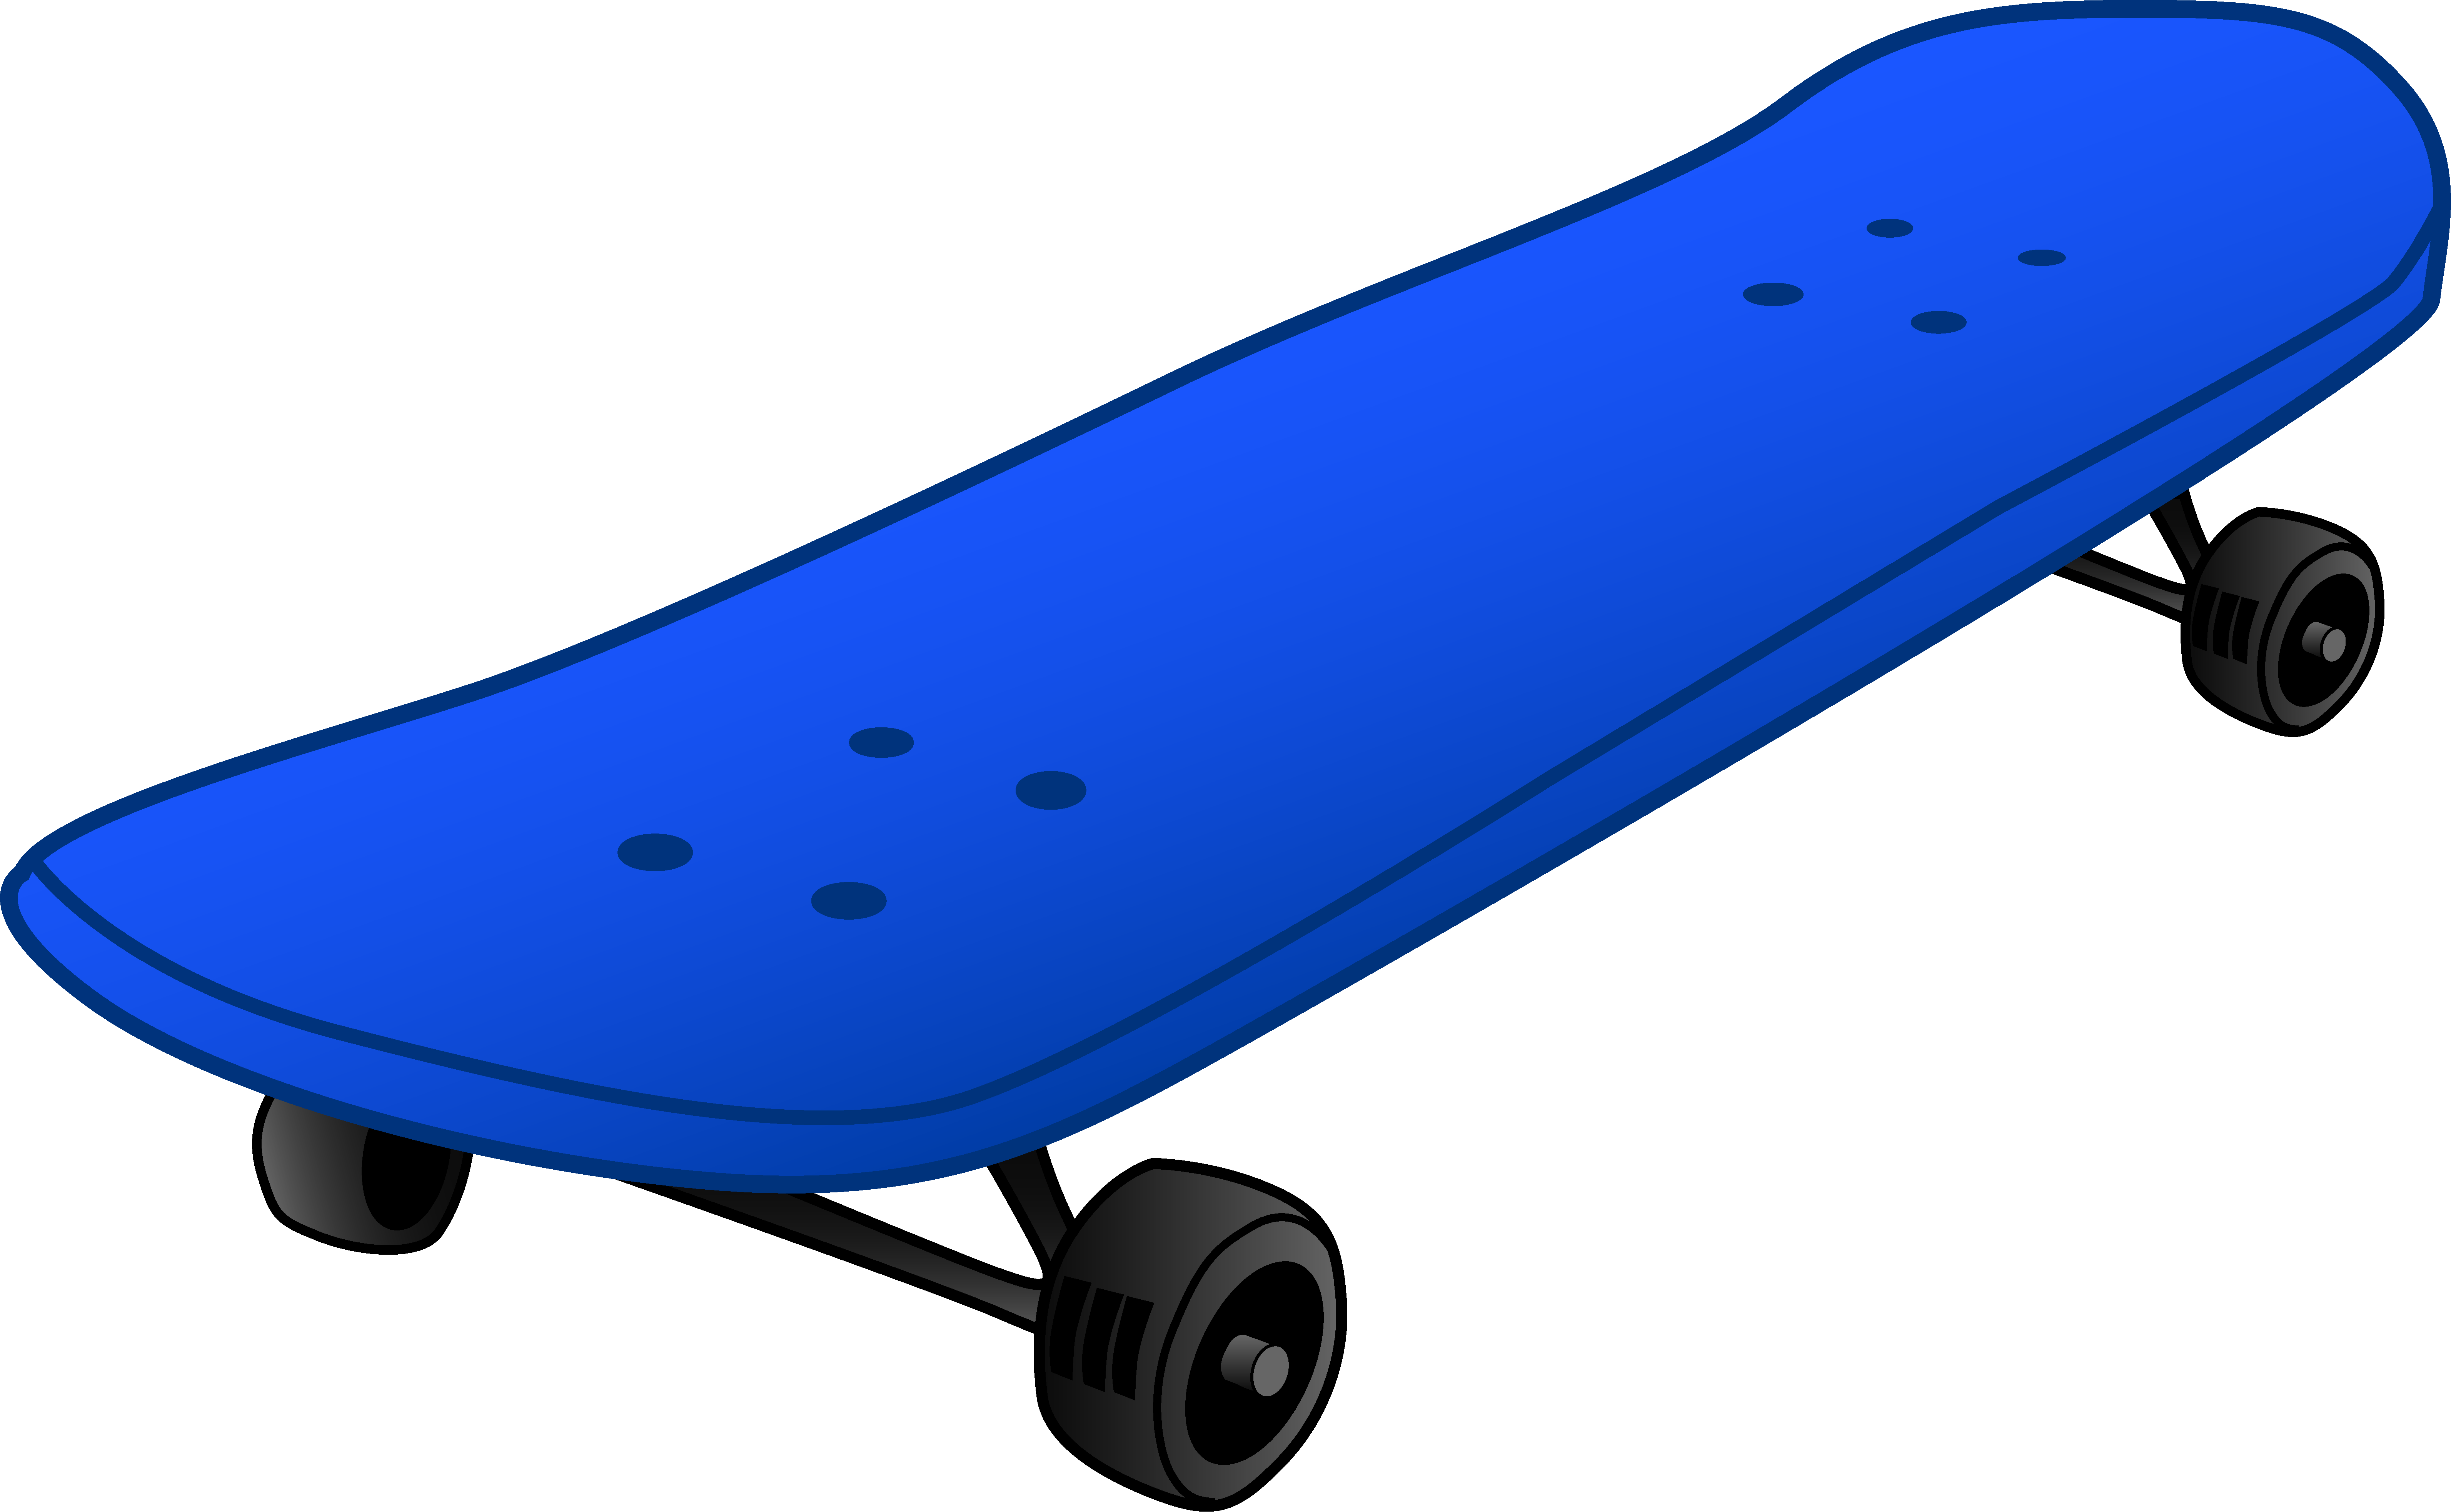 skateboard: Boy Riding a Skat